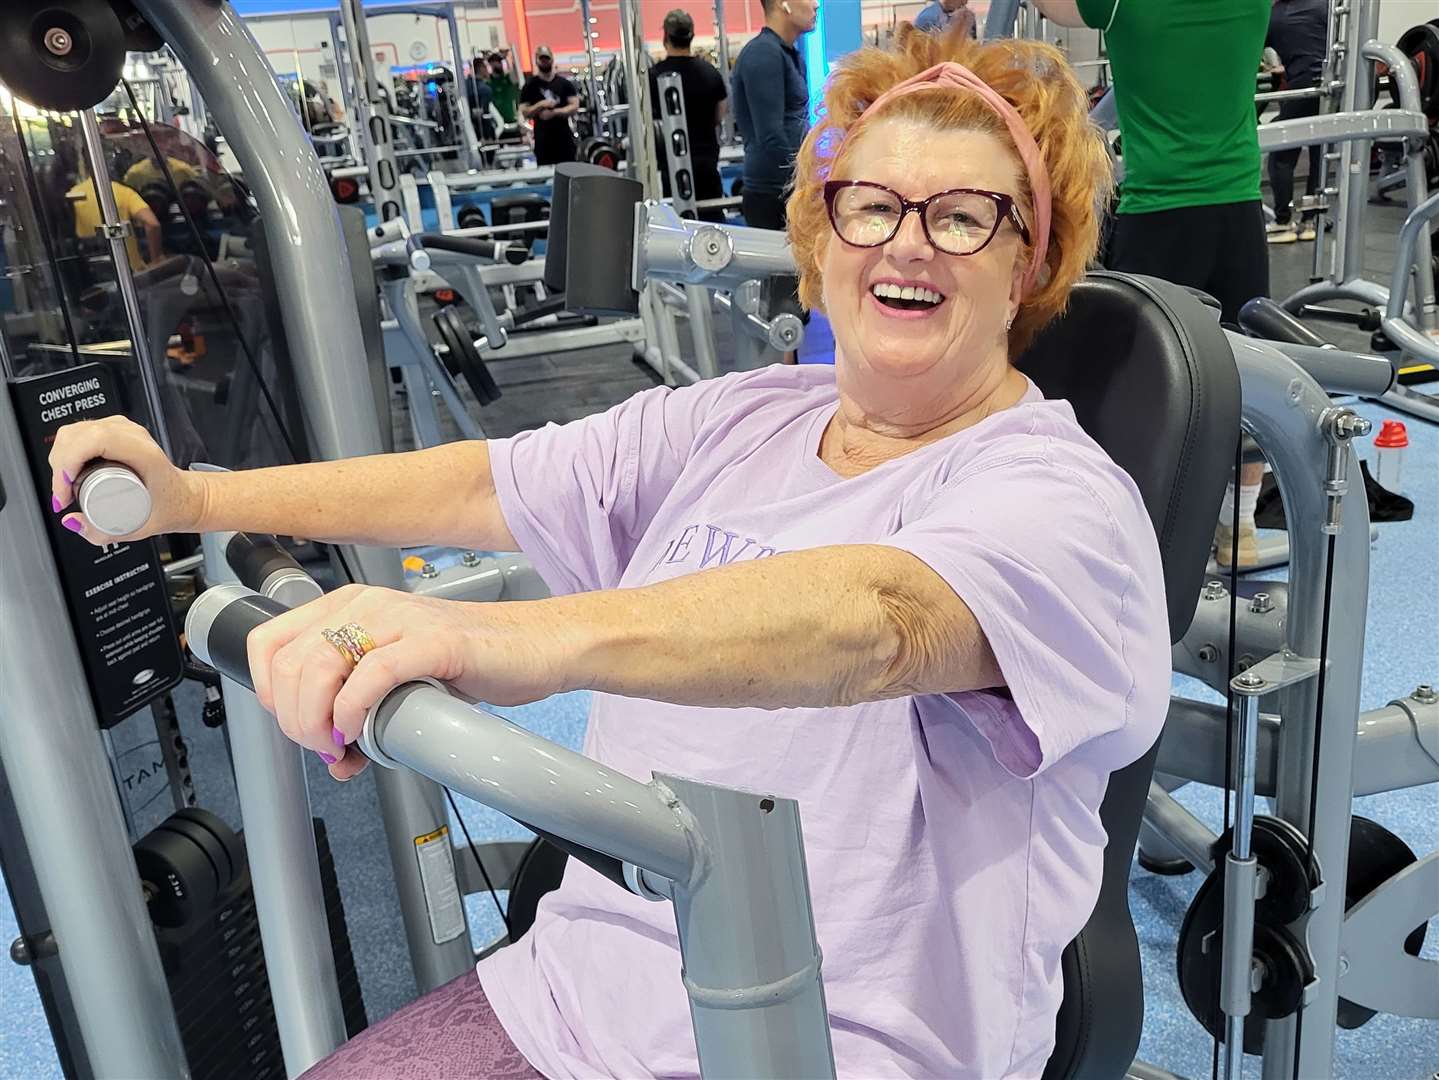 Belle Gray, from Ramsgate, is still fond of exercise despite her change in taste in snacks